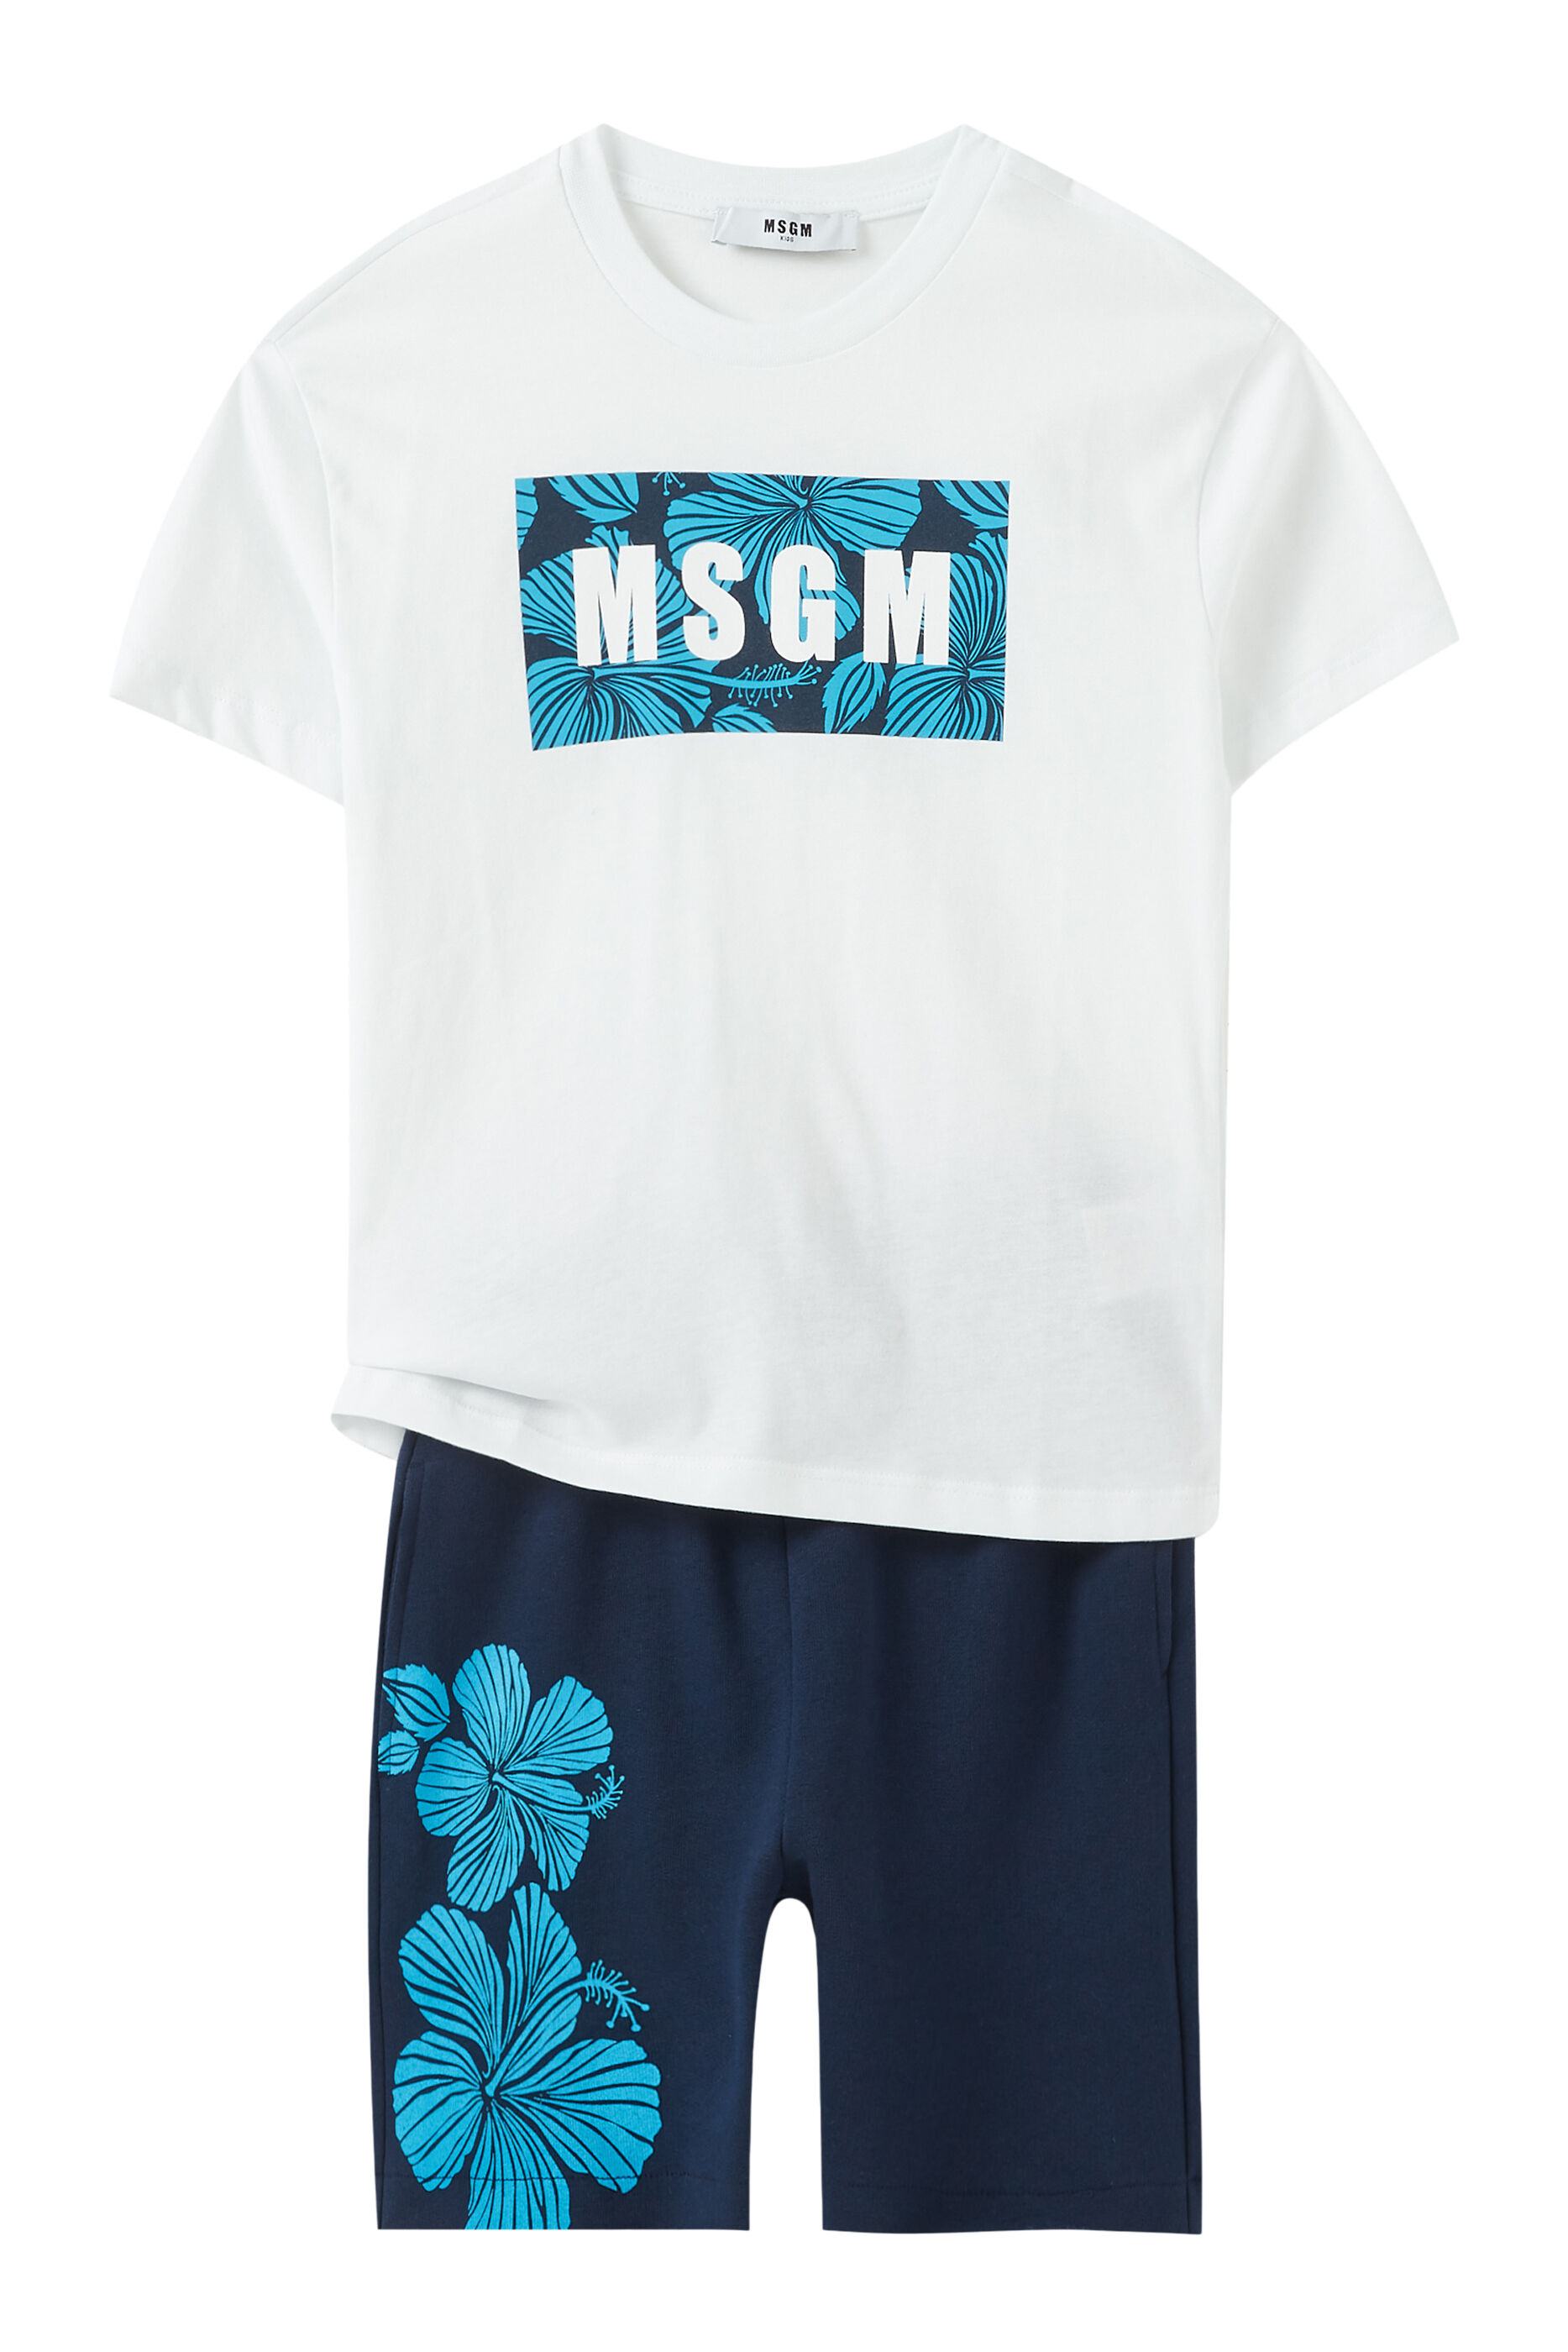 MSGM Kids logo-print cotton T-shirt and shorts set - White